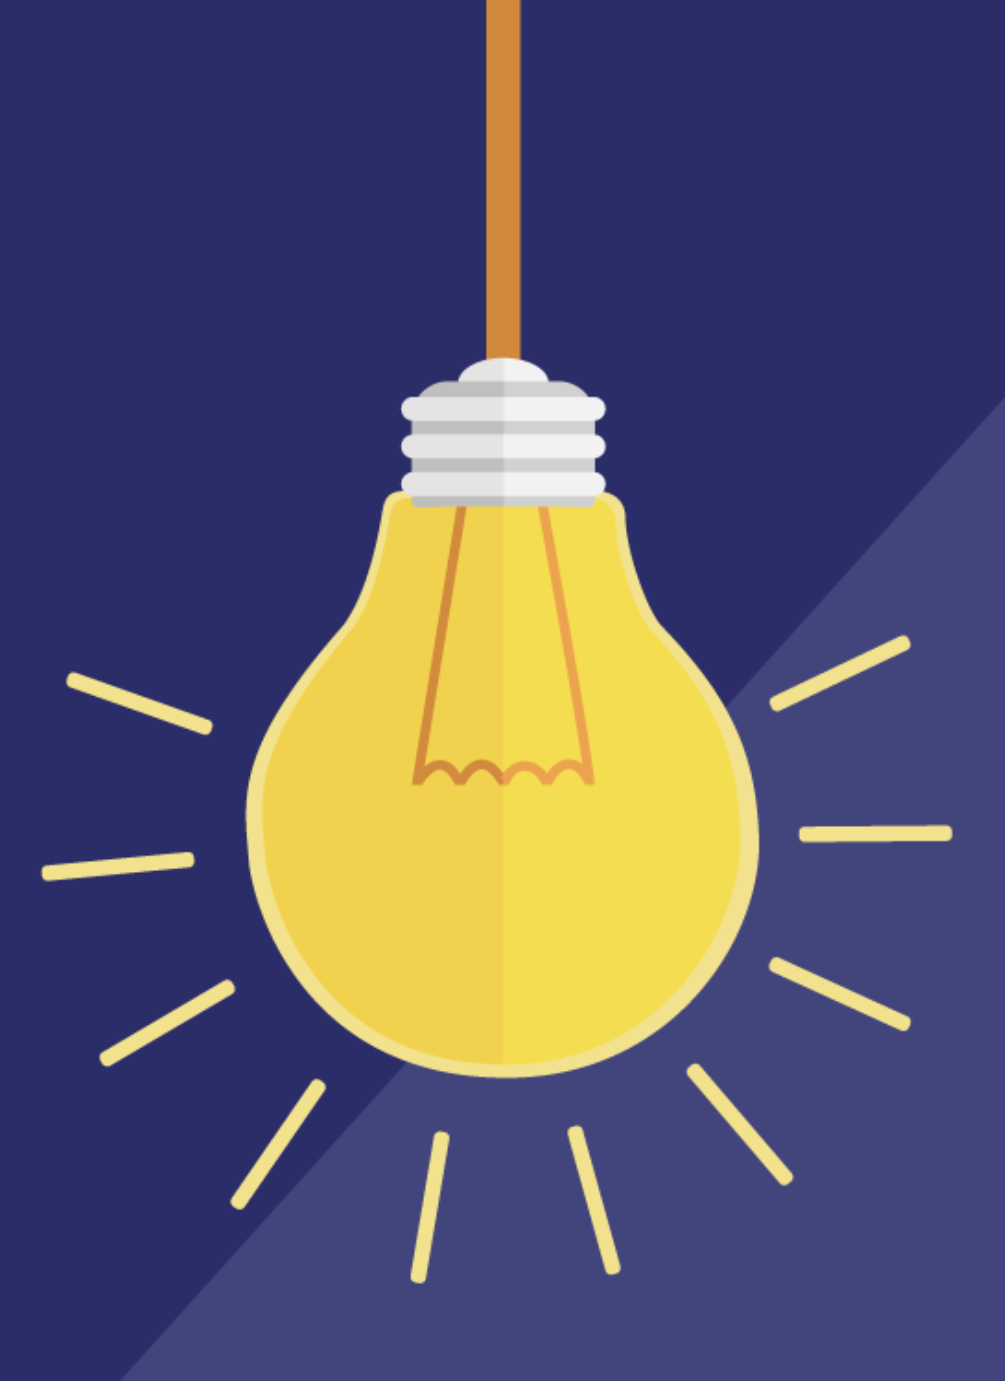 CTRL Teaching Tips. Image: a bright lightbulb symbolizing ideas